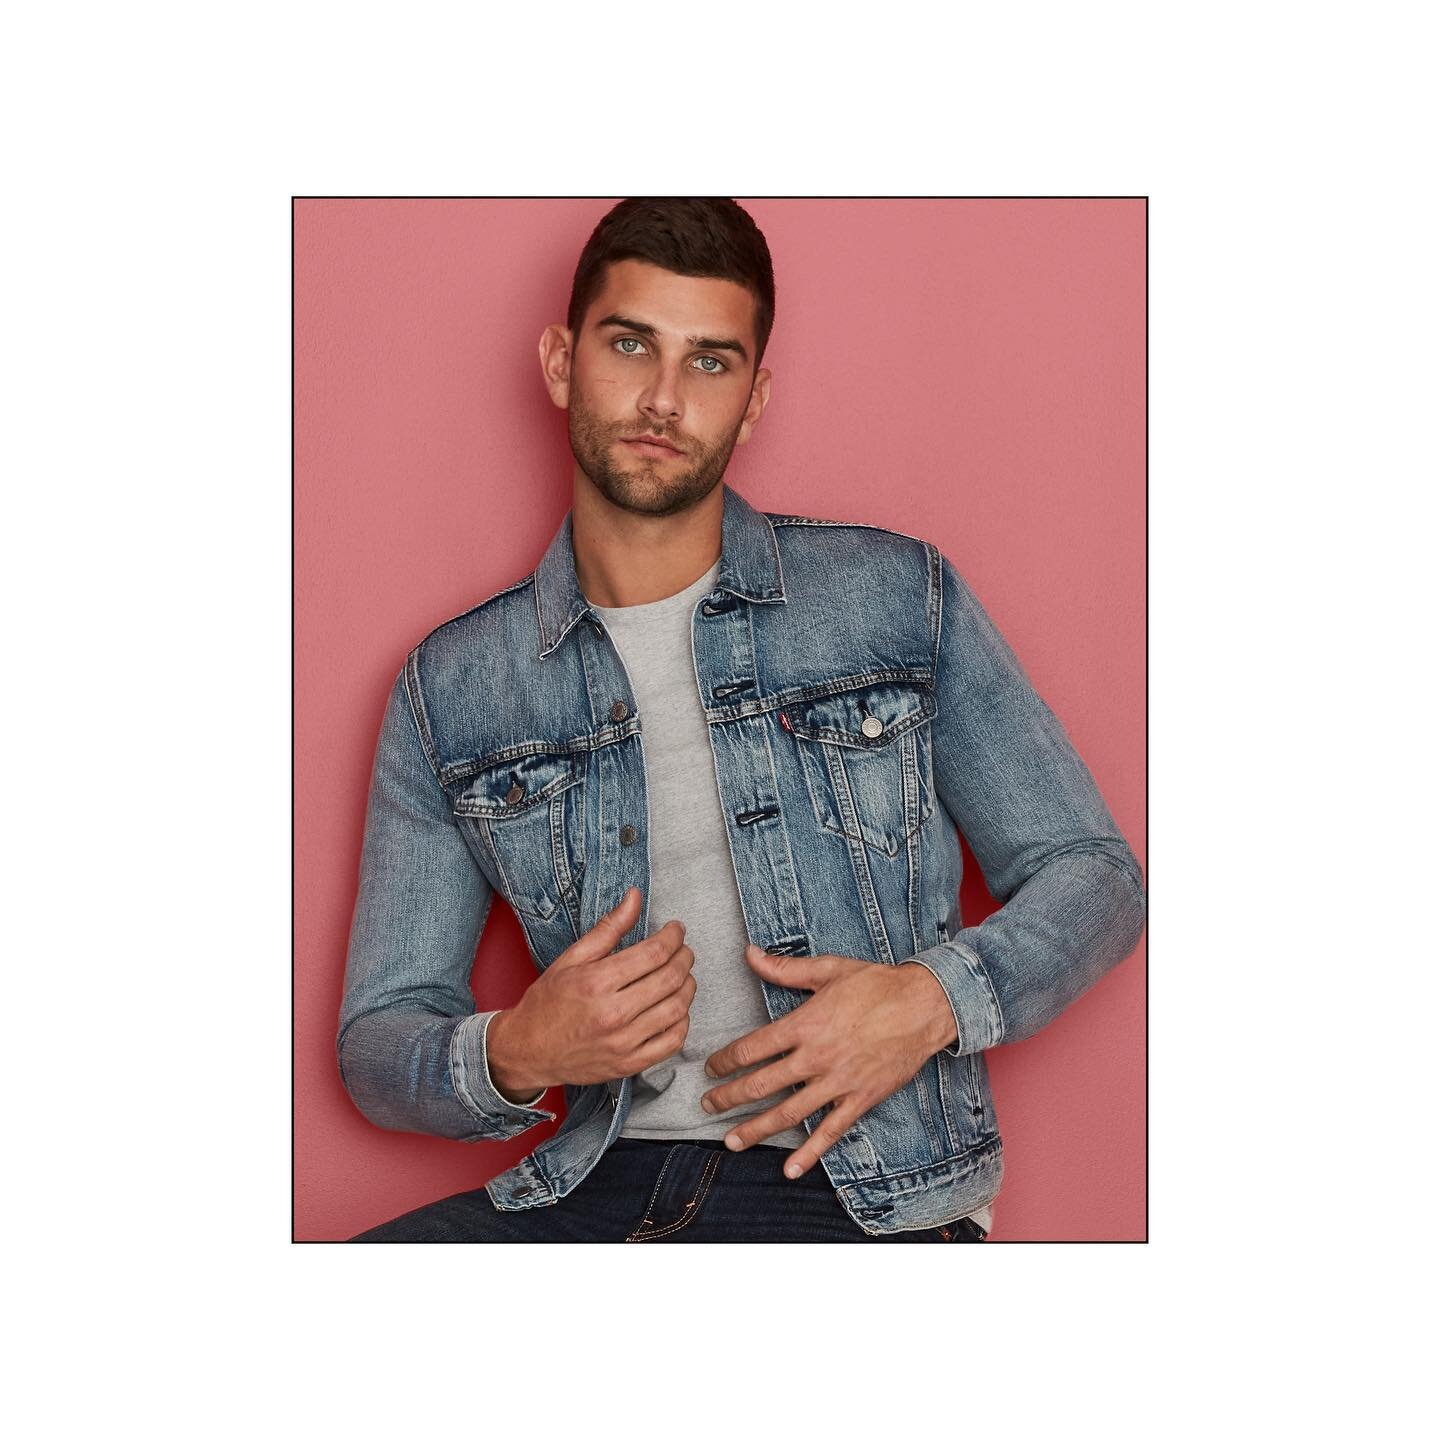 giacca di jeans 
:
:
:
:
#denimjacket #alwaysclassic #wardrobestaple #studioshoot #campaign #tbt🔙 

🕺🏻 @jackvanderhart 
📷 @simonuptonpics 
🎬 @theresafrankovich